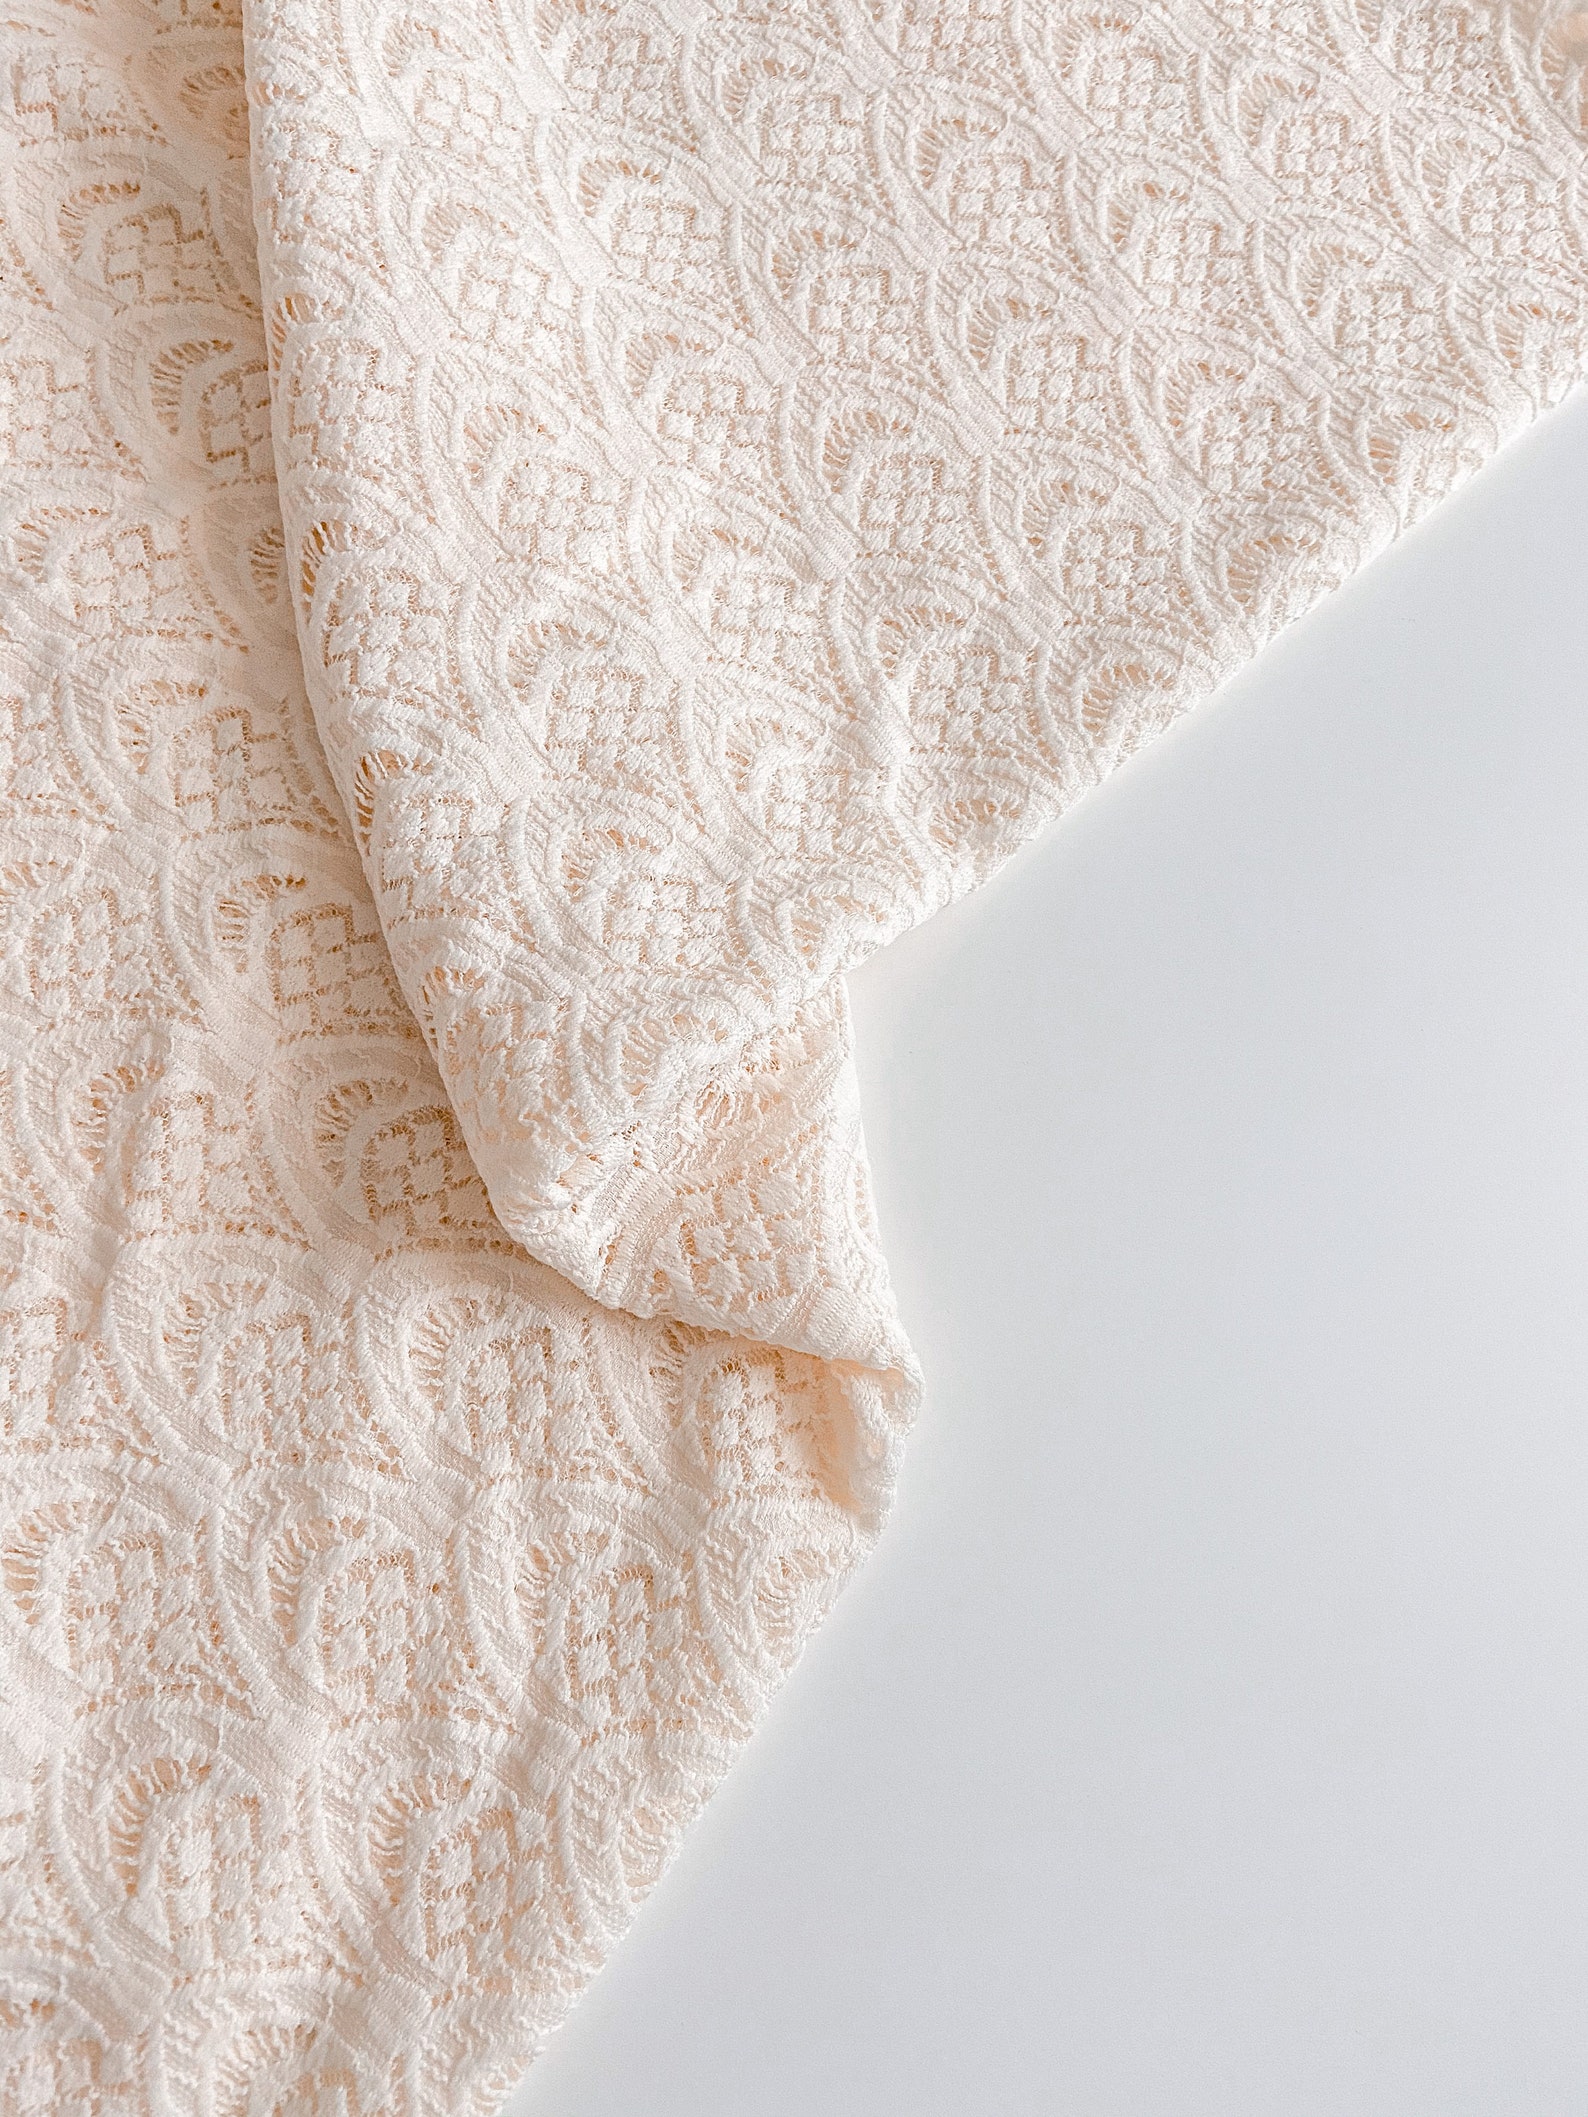 Cream Knit Lace Fabric 1/2 Yard | Etsy